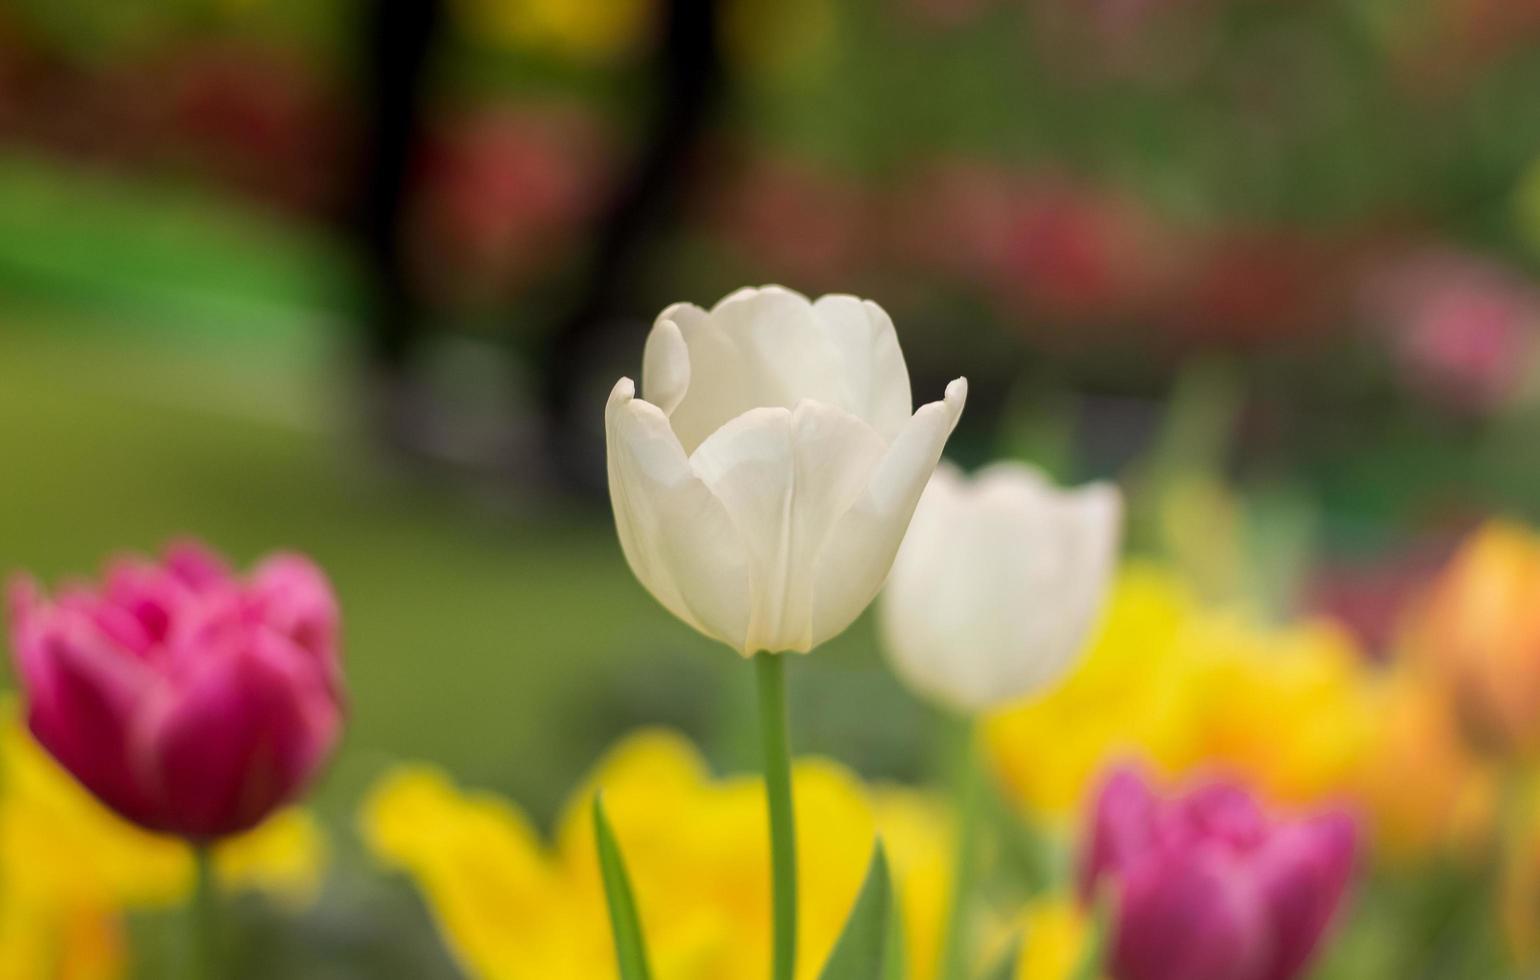 flores tulipa no jardim foto